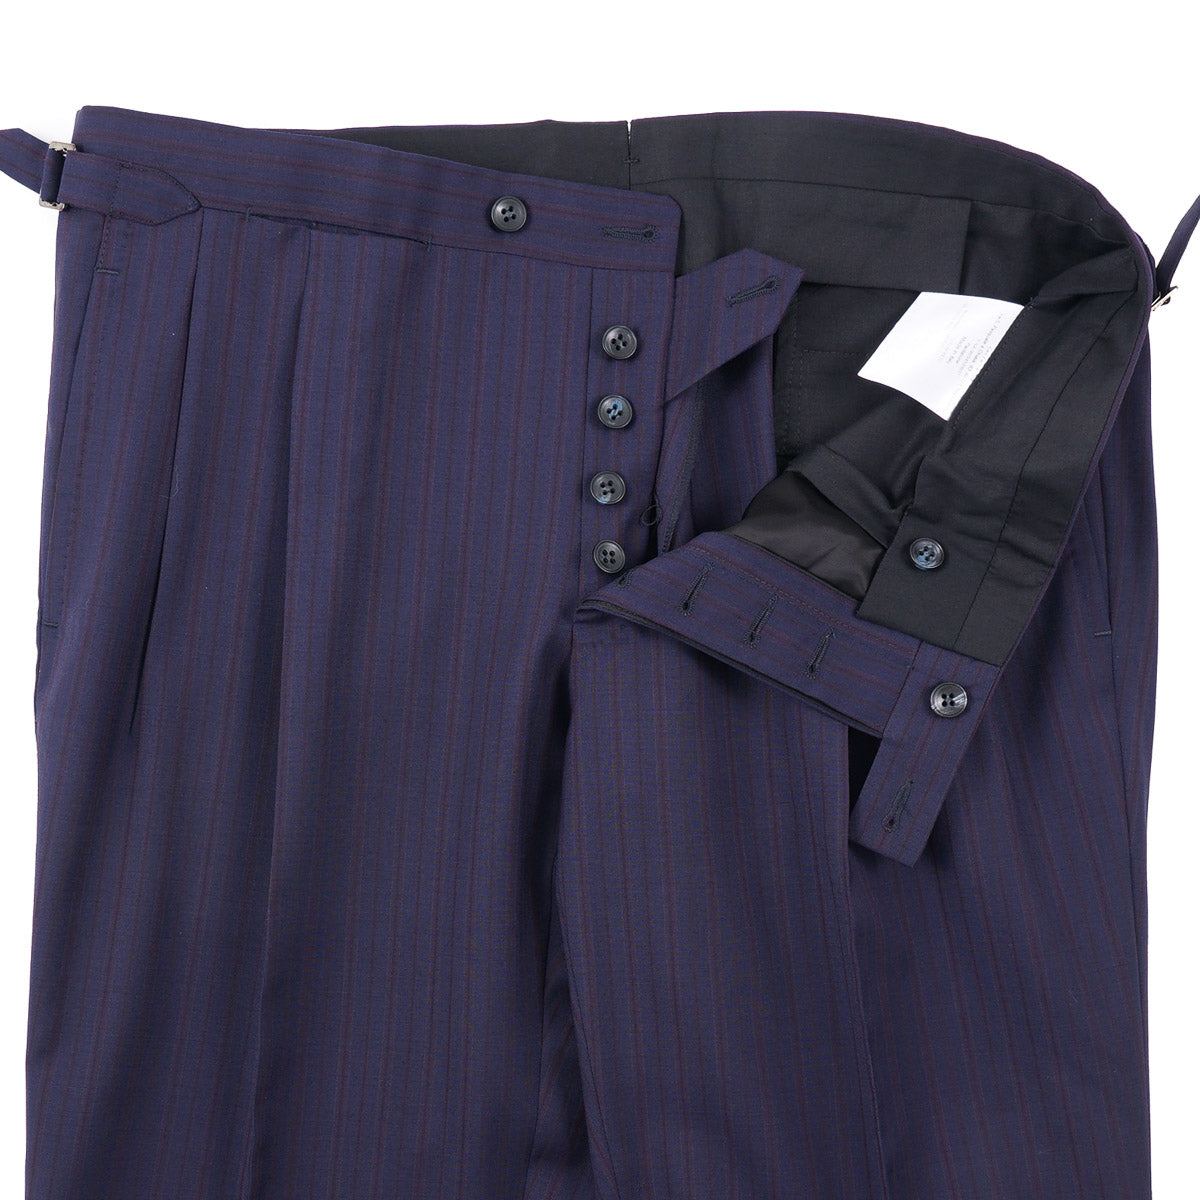 Sartorio Soft-Constructed Lightweight Wool Suit - Top Shelf Apparel